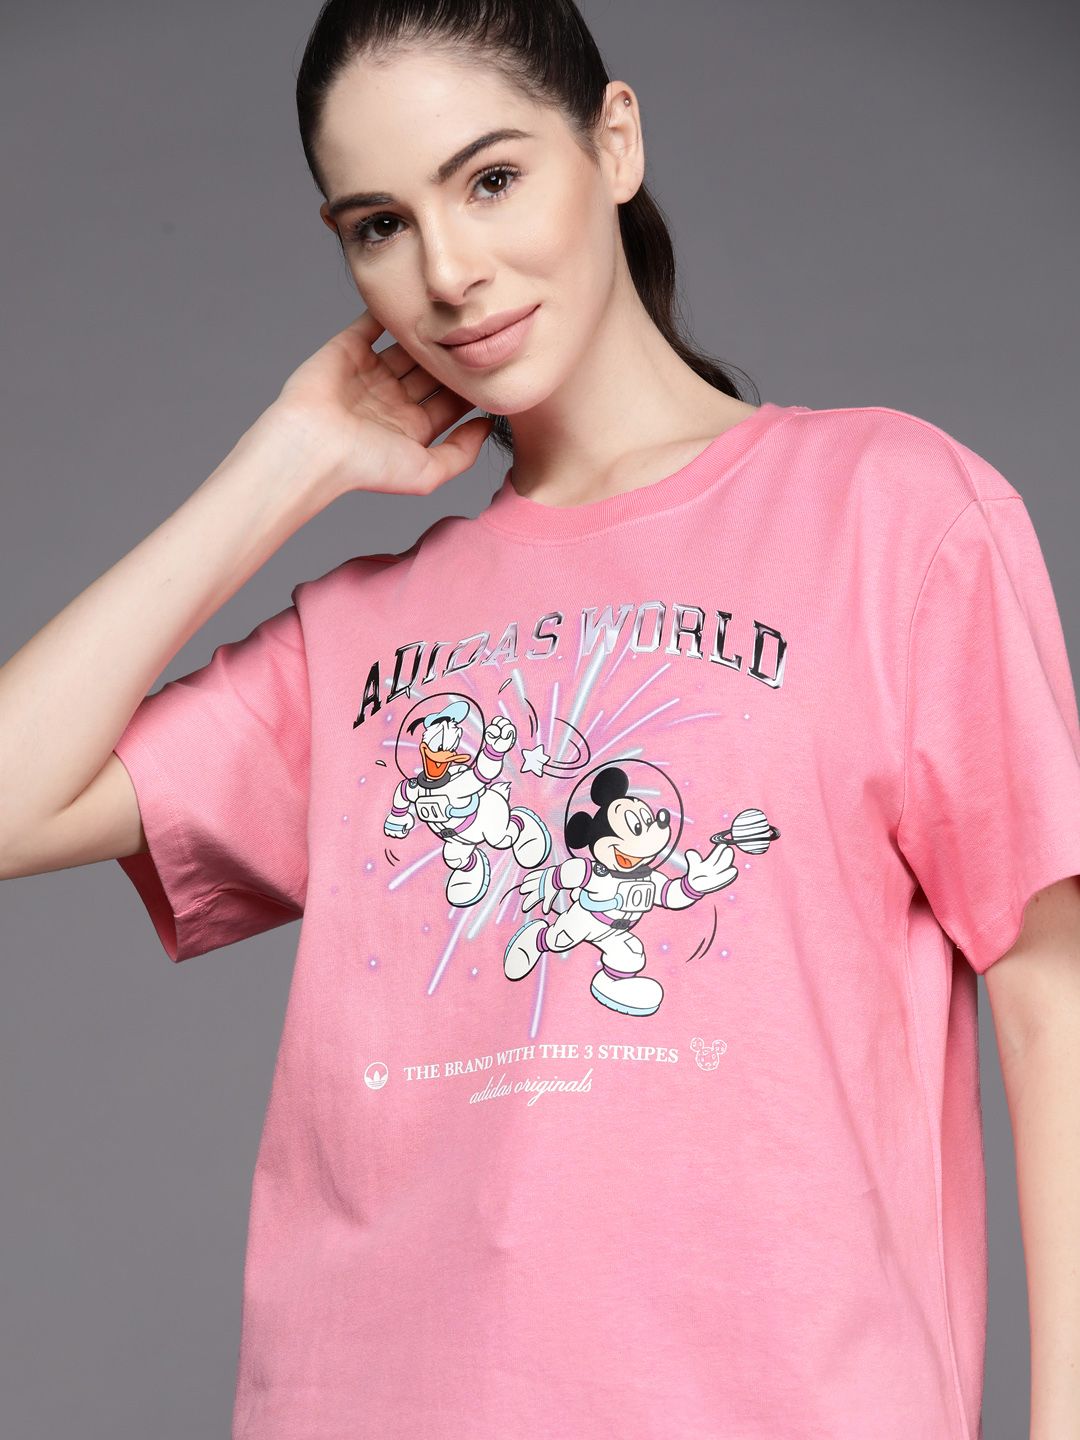 ADIDAS Originals Women Pink & White Pure Cotton Disney Graphic Printed T-shirt Price in India